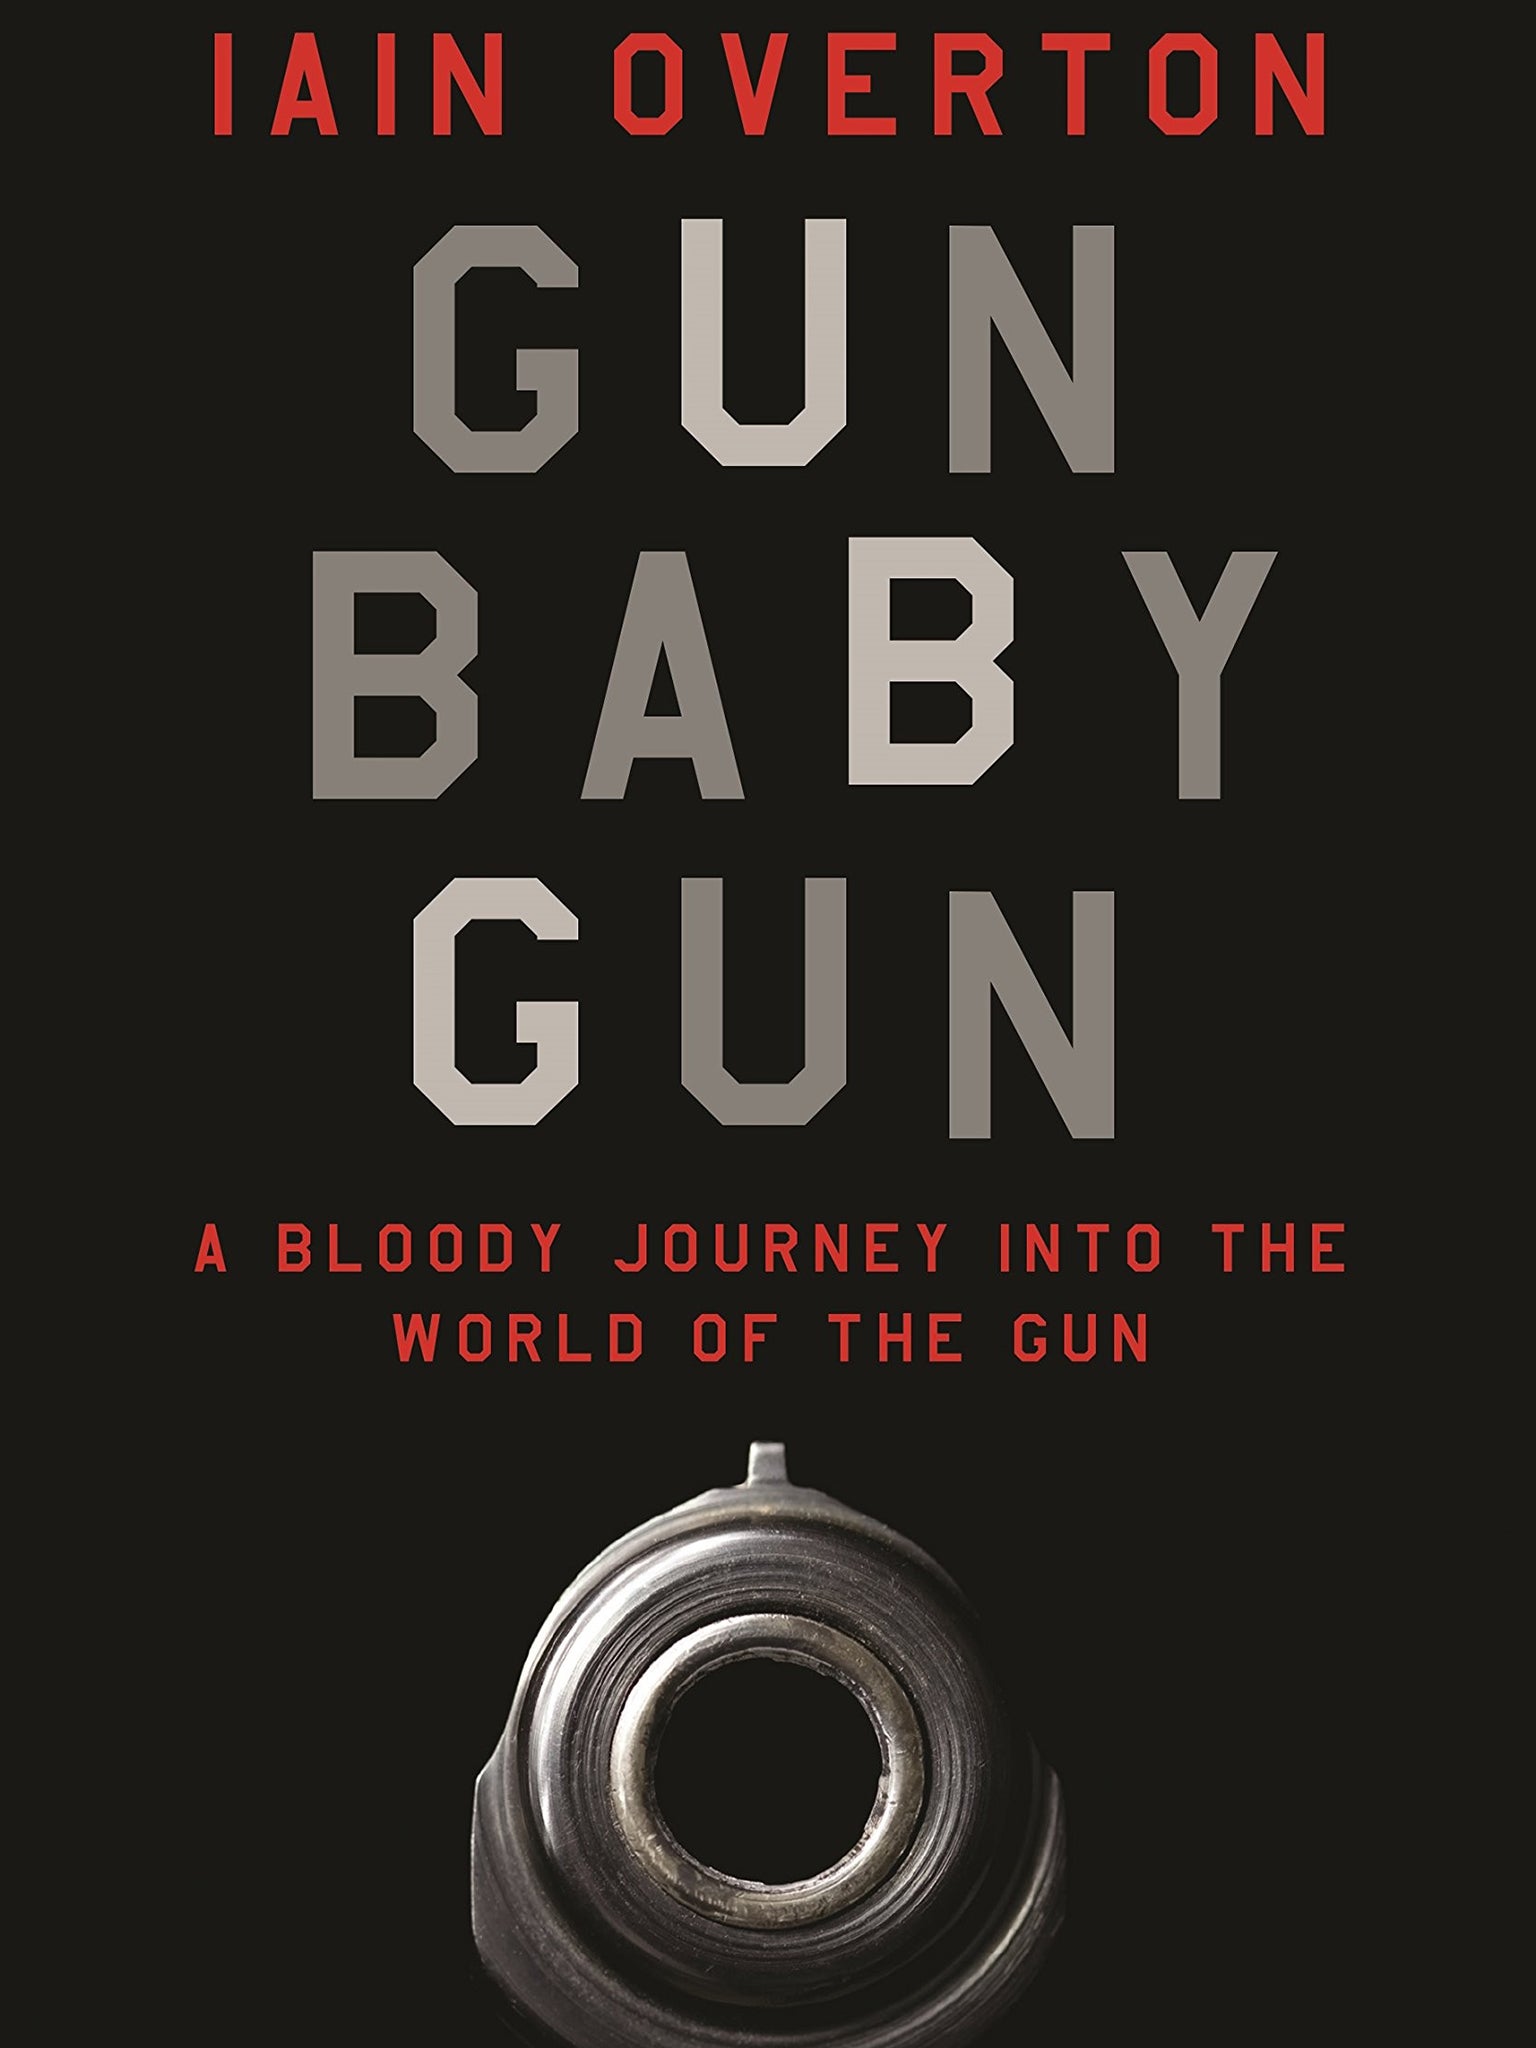 Gun Baby Gun by Iain Overton